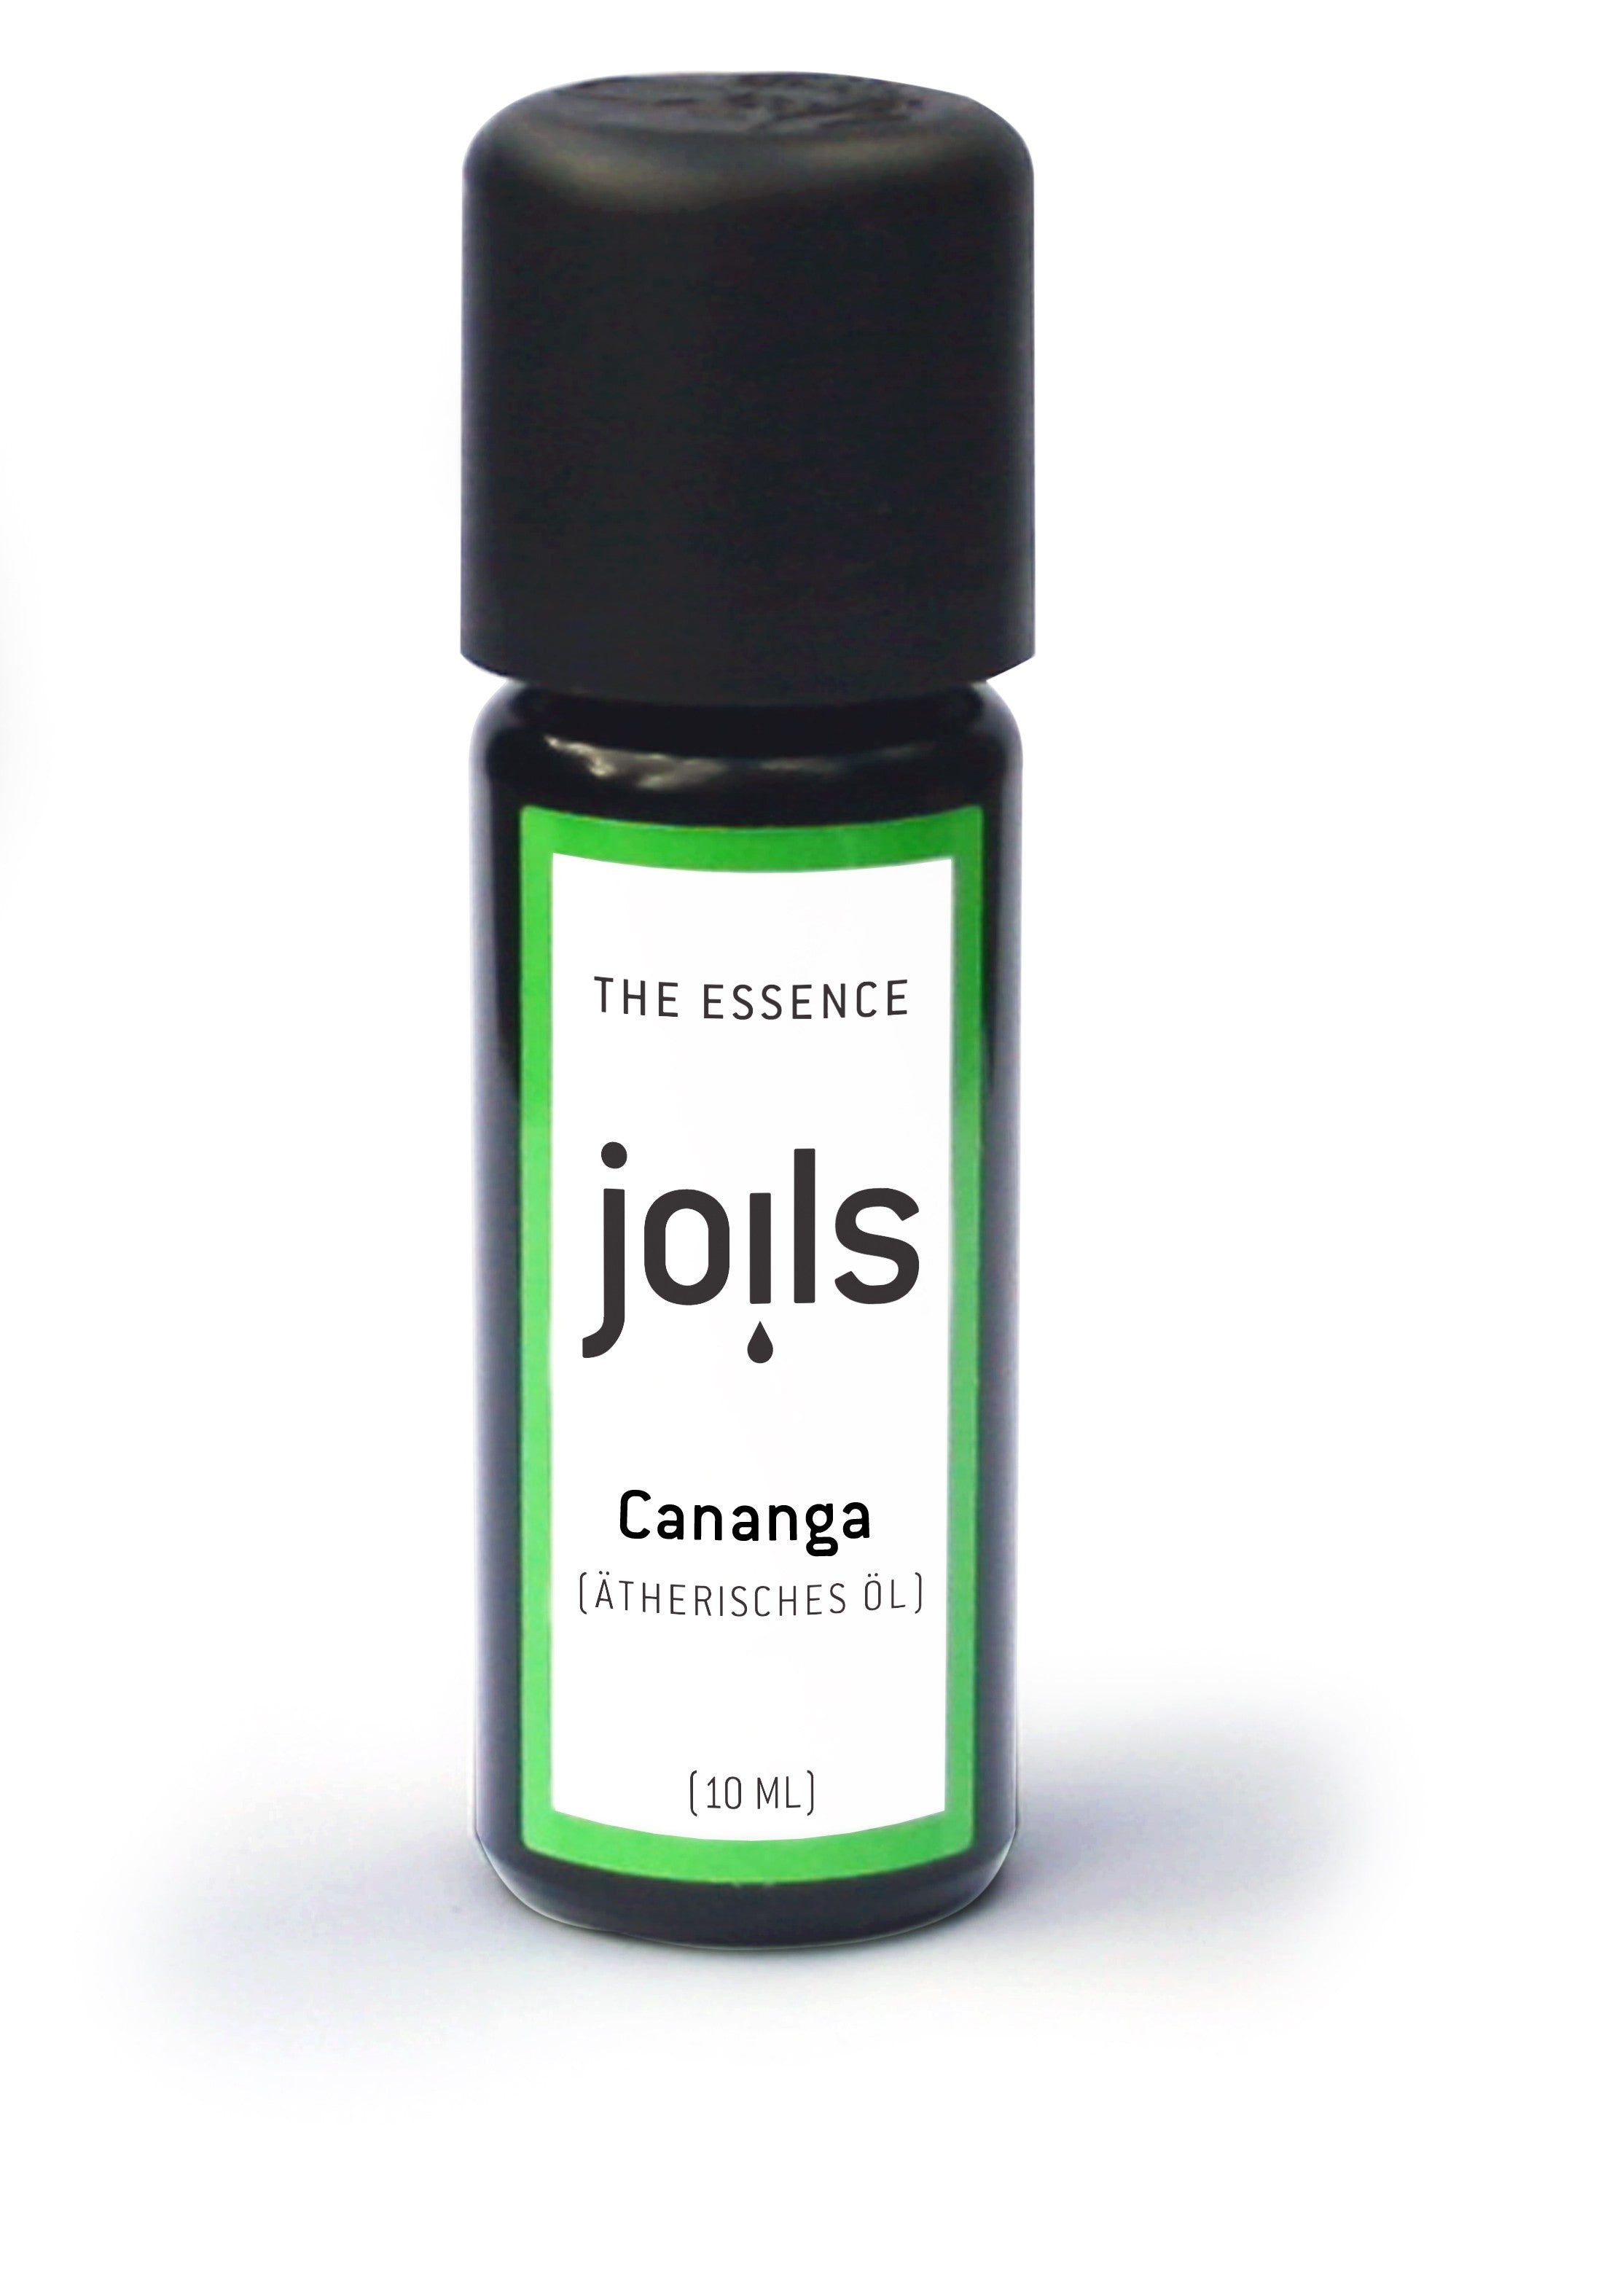 CANANGA 10ml - Joils